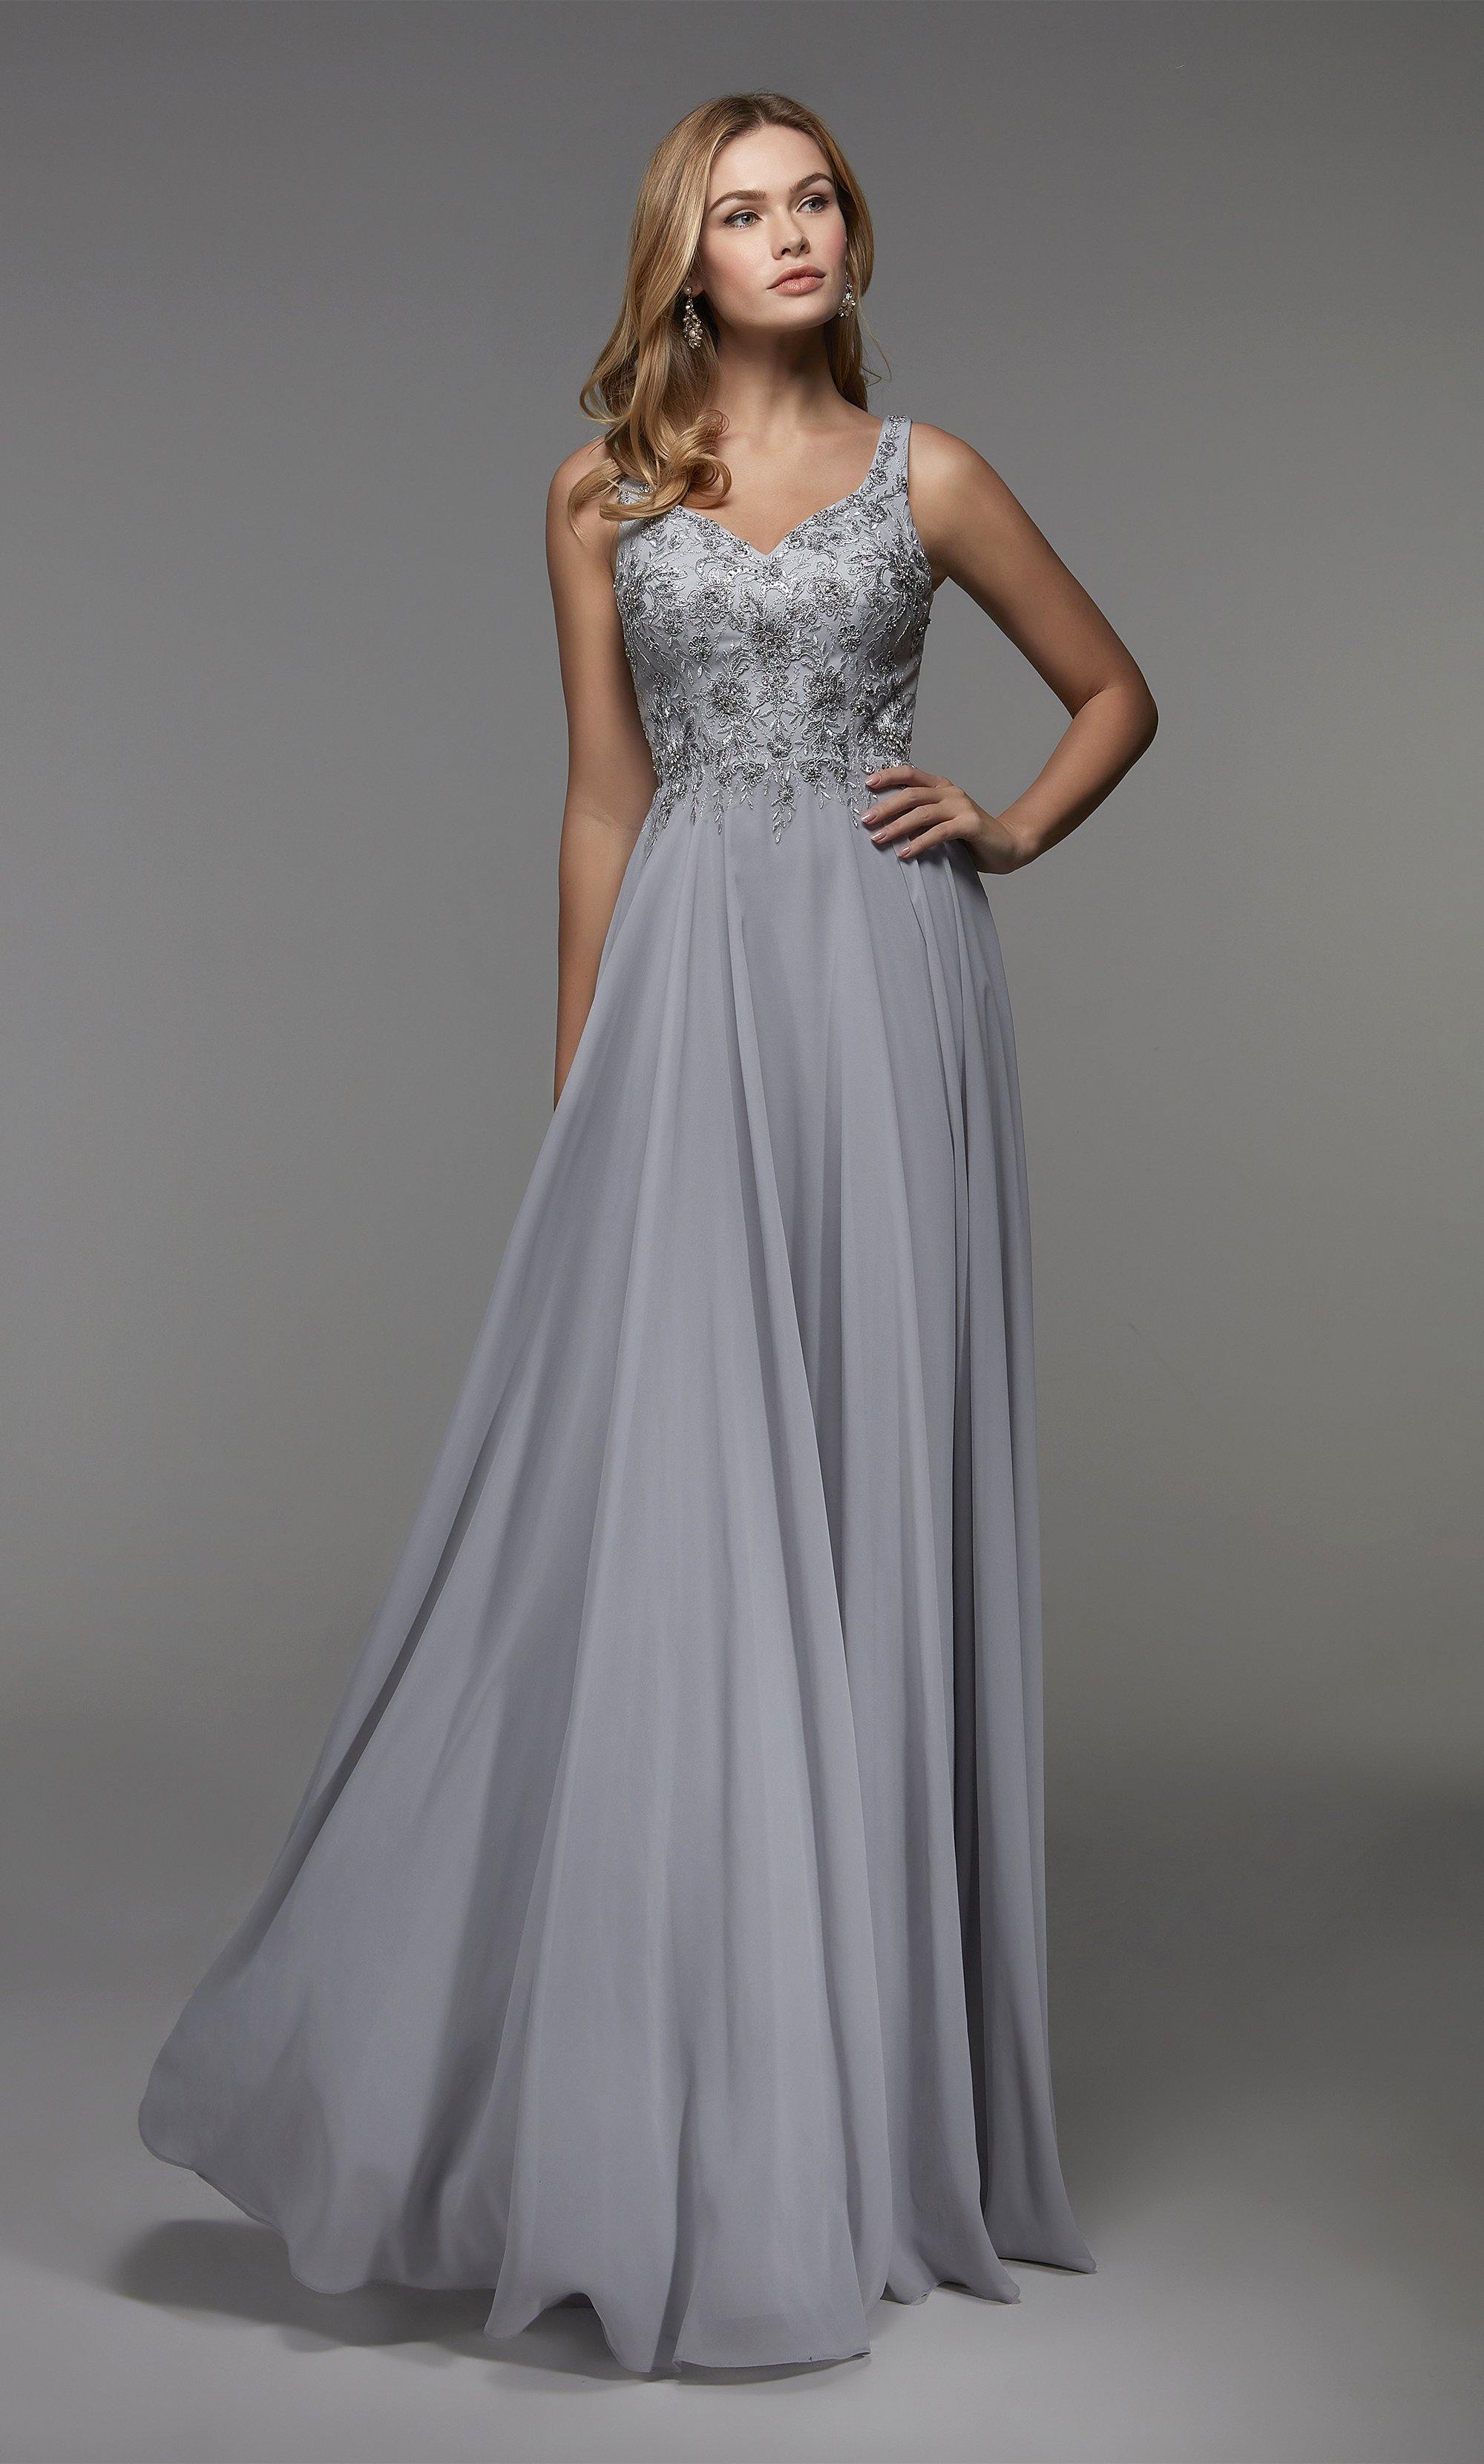 Formal Dress: 27473. Long Evening Dress, Sweetheart Neckline, Flowy Alyce Paris